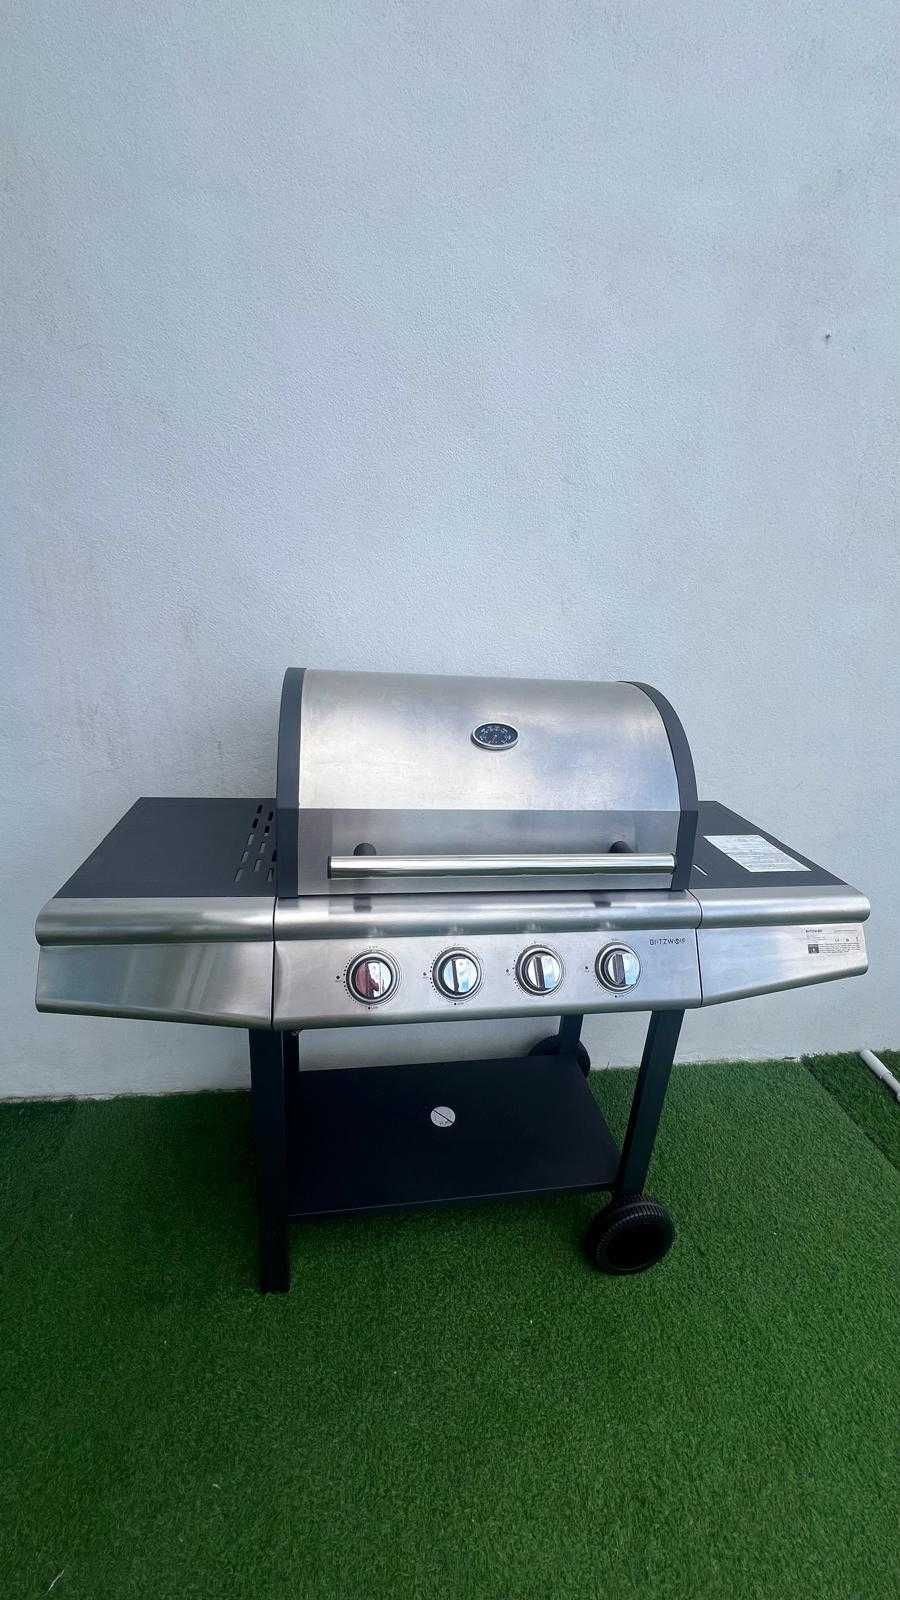 BBQ barbeque - churrasqueiro a gaz  - inox - 4 queimadores 14.4 KW